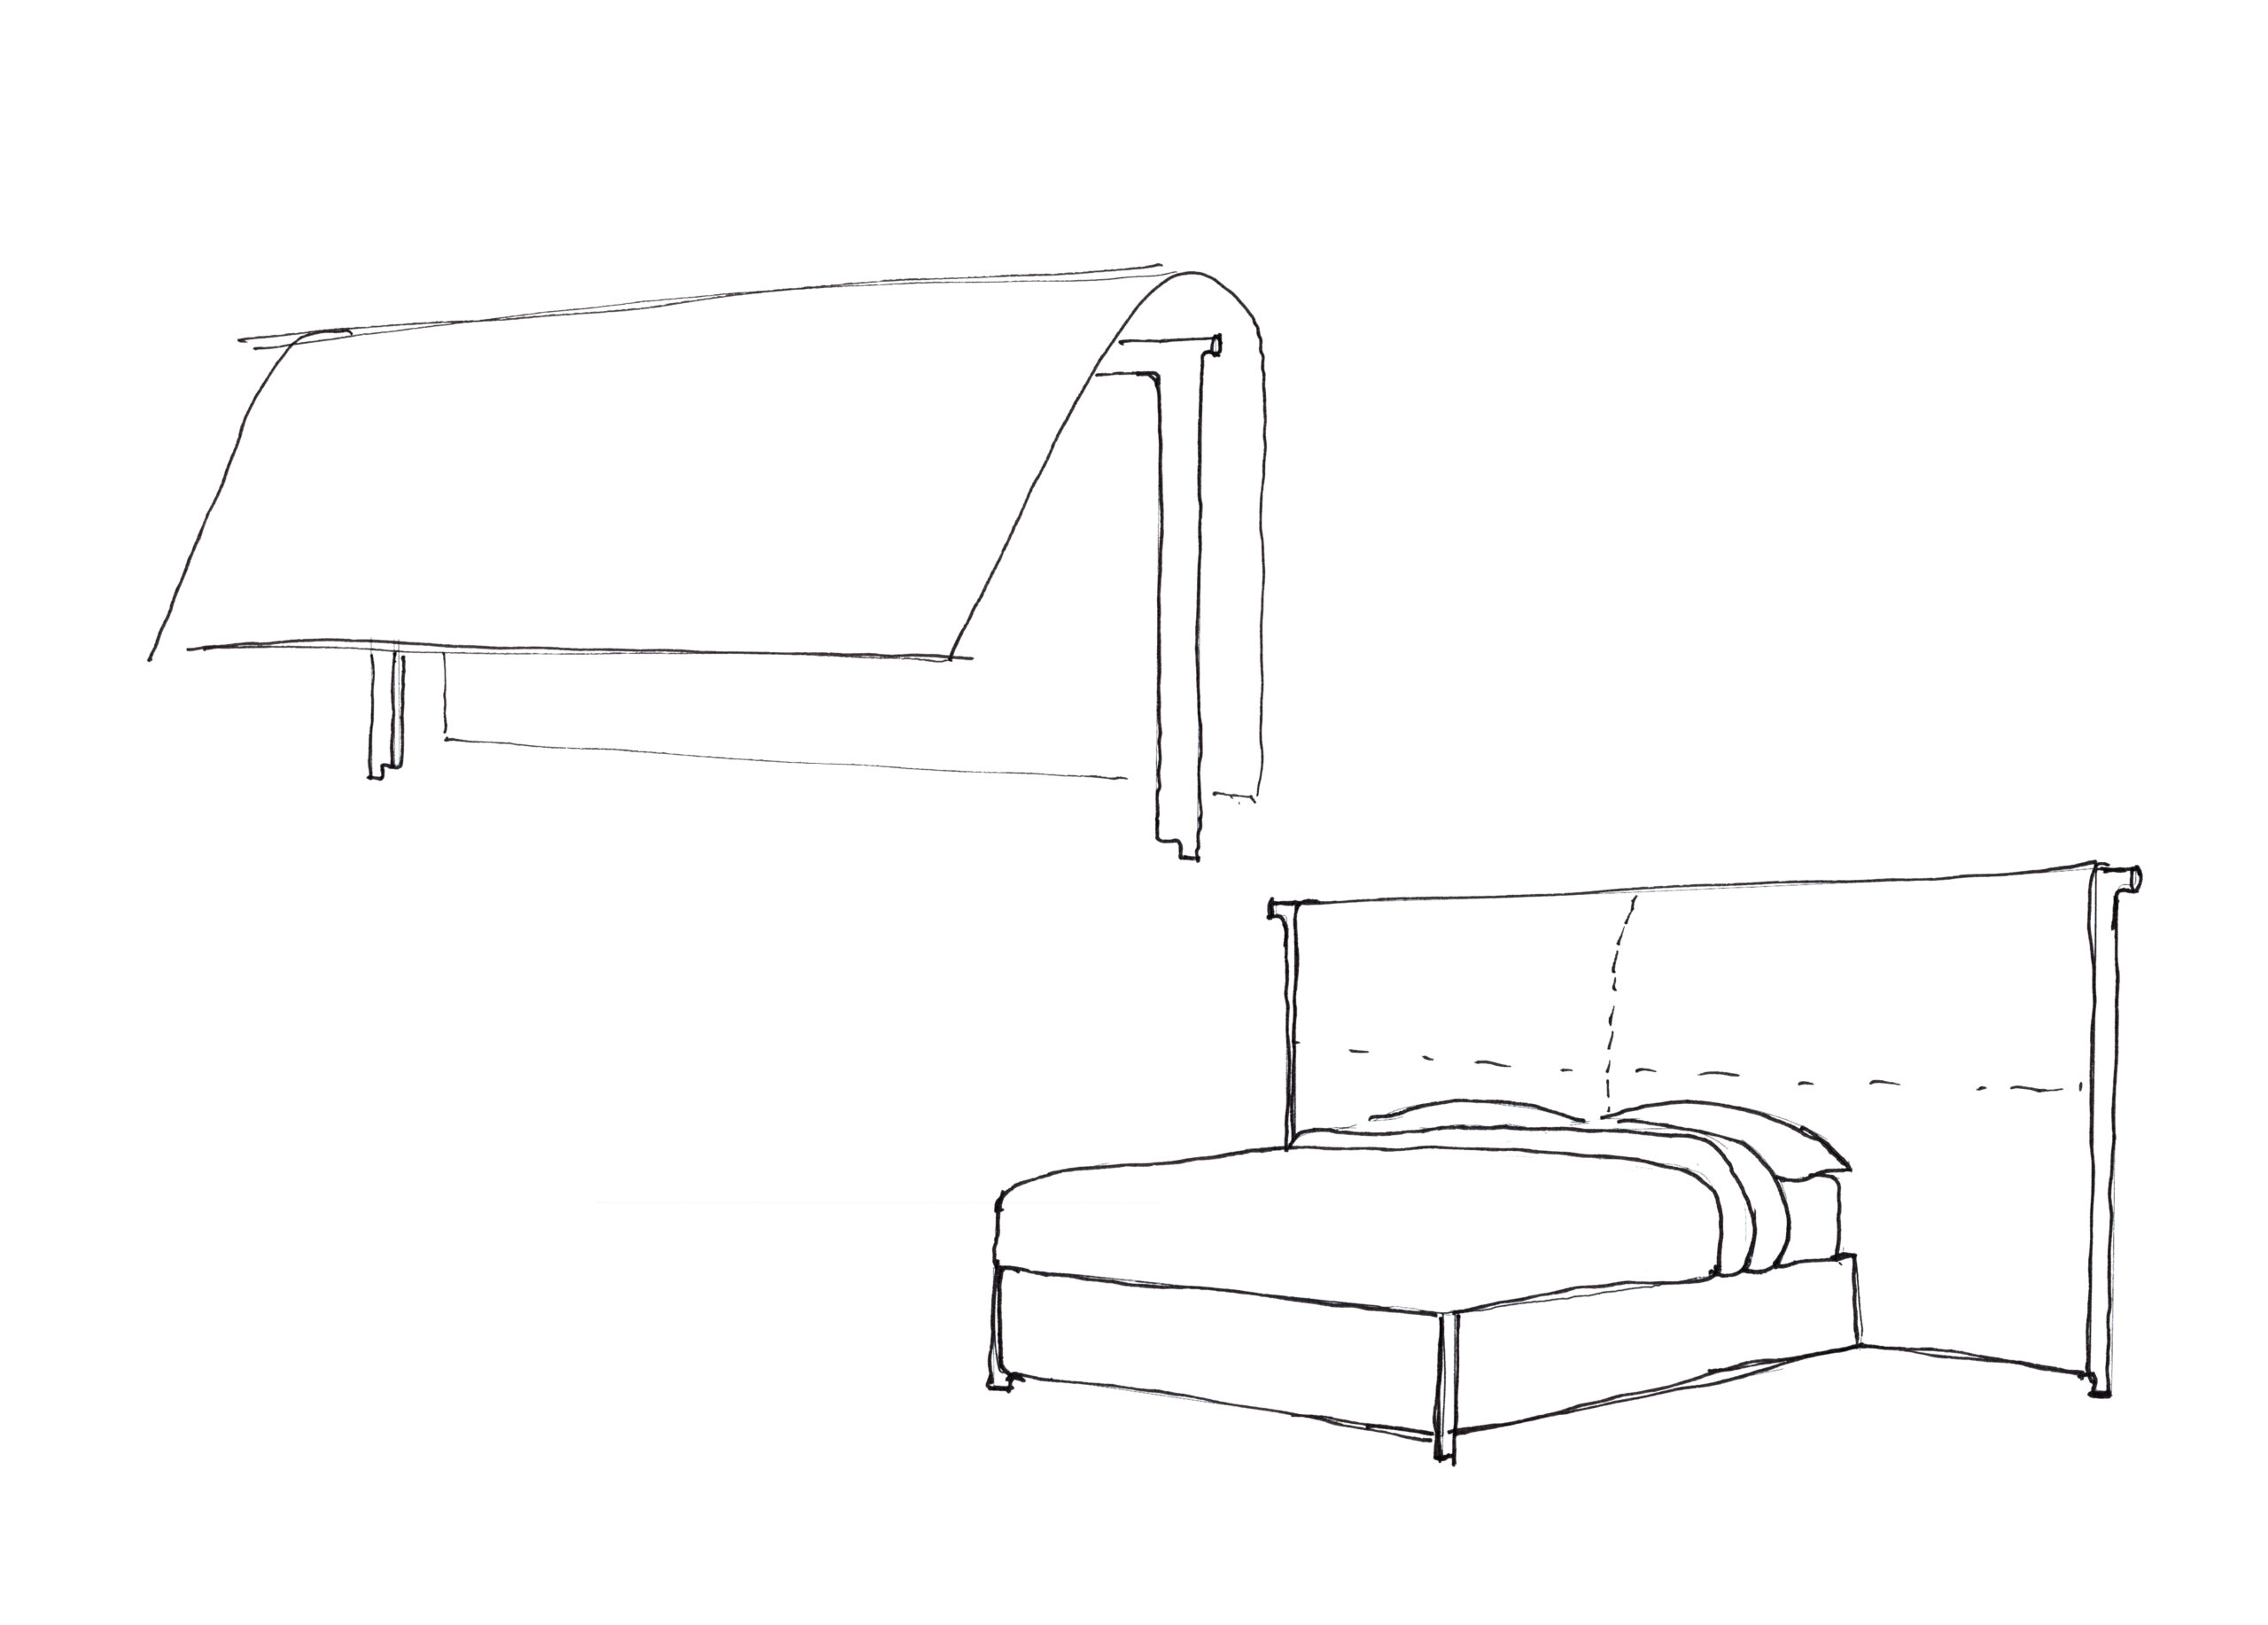 Sketch of Sipario bed designed by Debiasi Sandri for Schramm